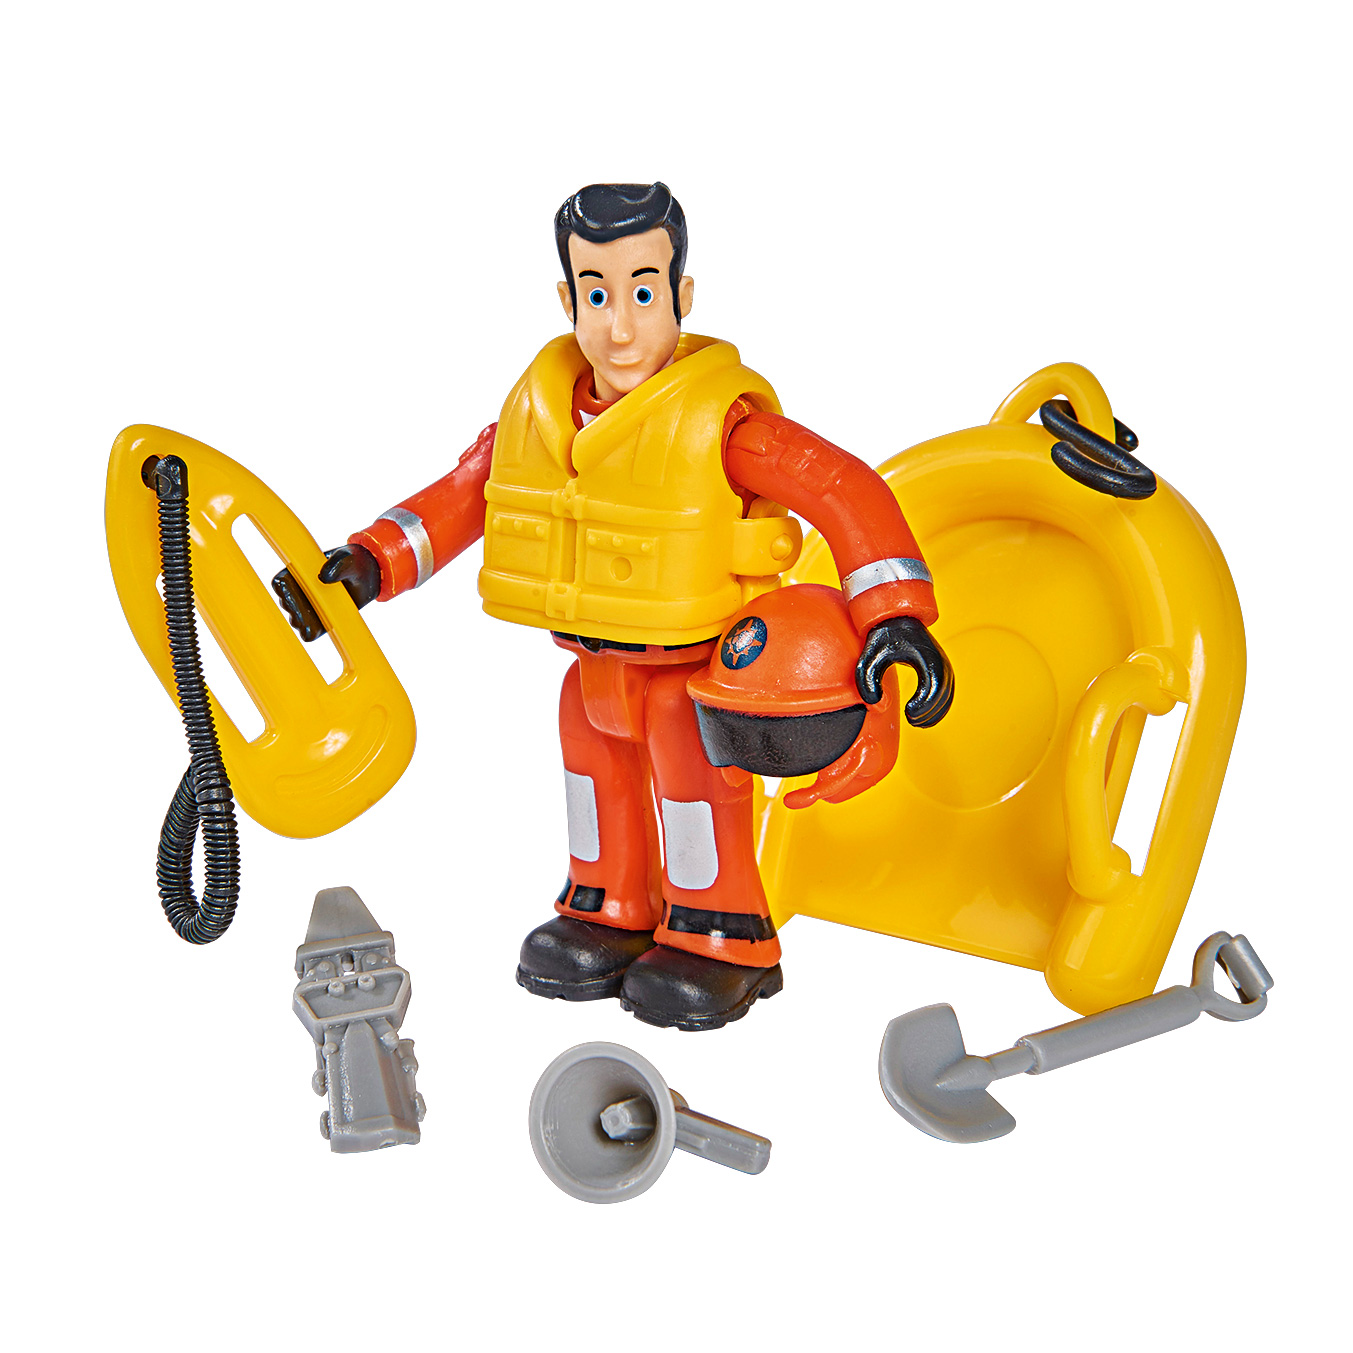 Sam le pompier Juno Jetski avec figurine